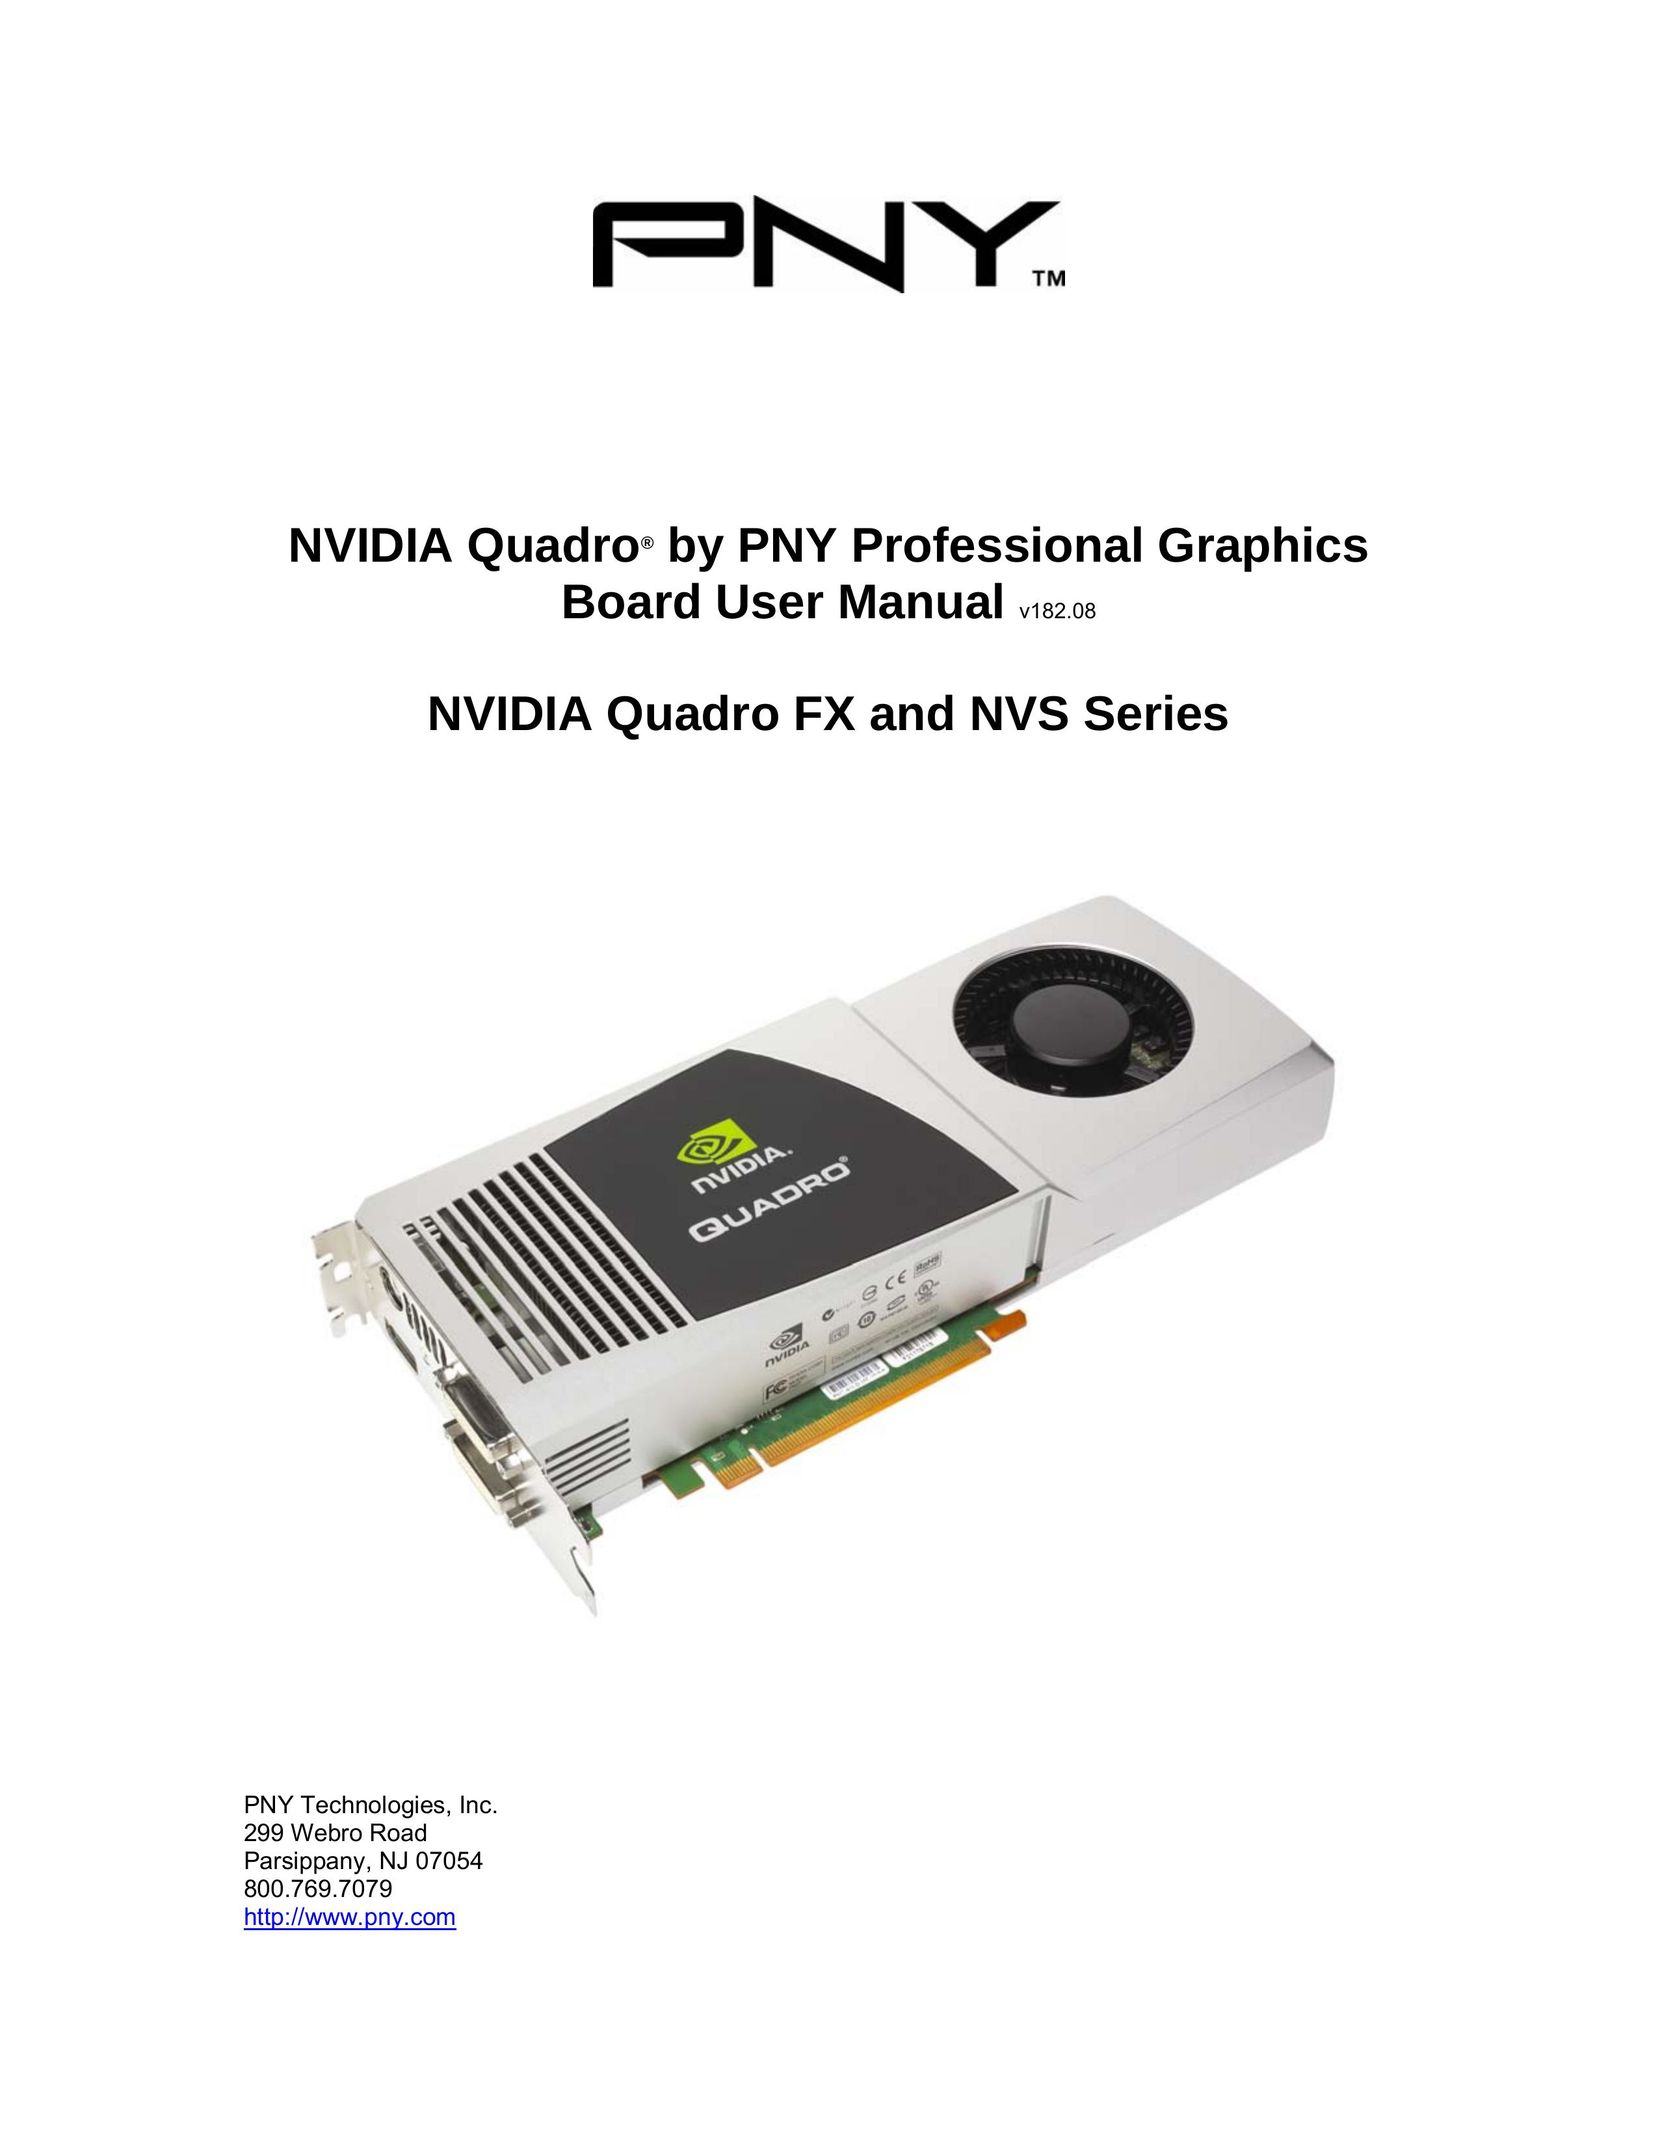 PNY FX 5500 SDI Computer Hardware User Manual